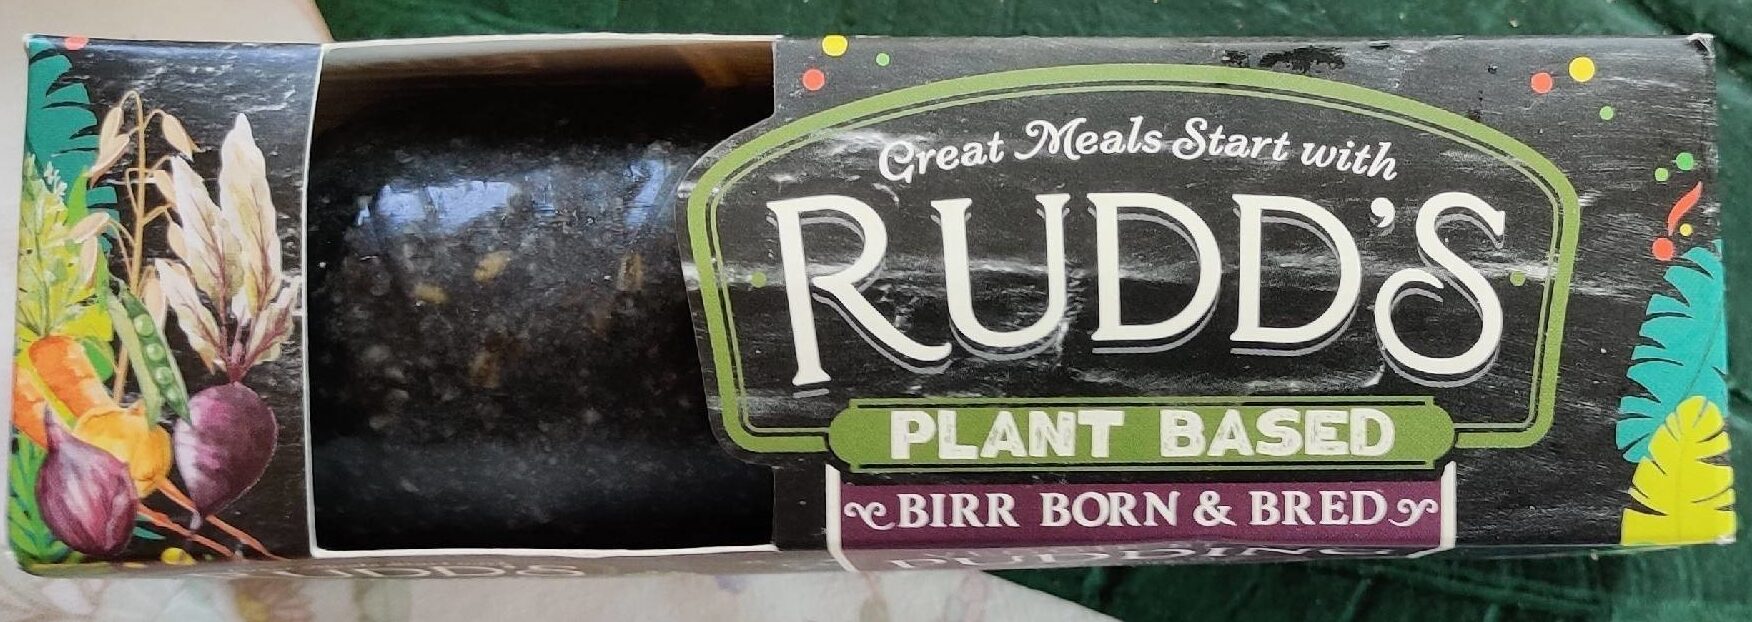 Plant Based Black Pudding - Product